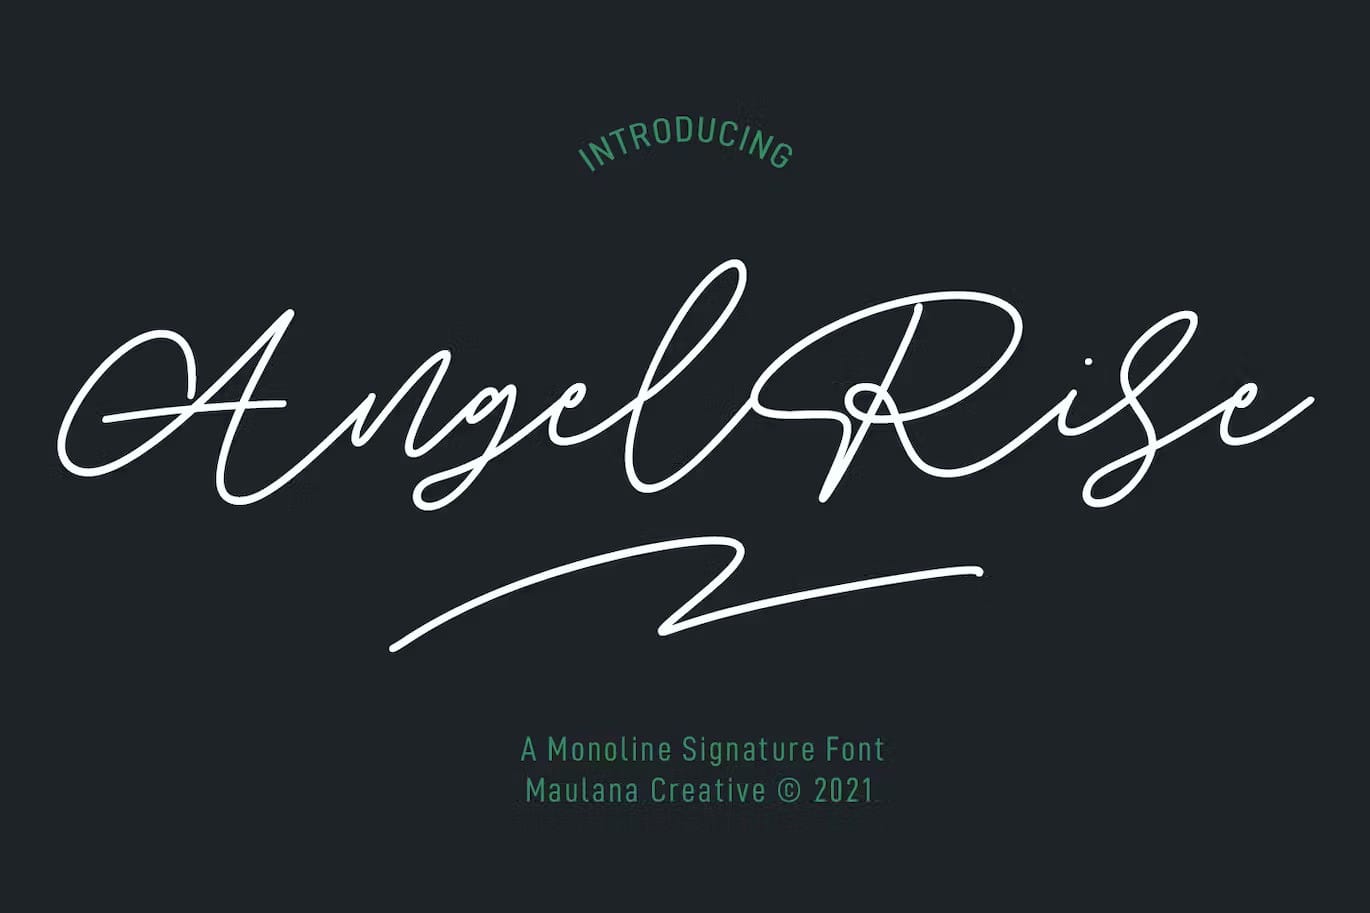 A monoline signature font